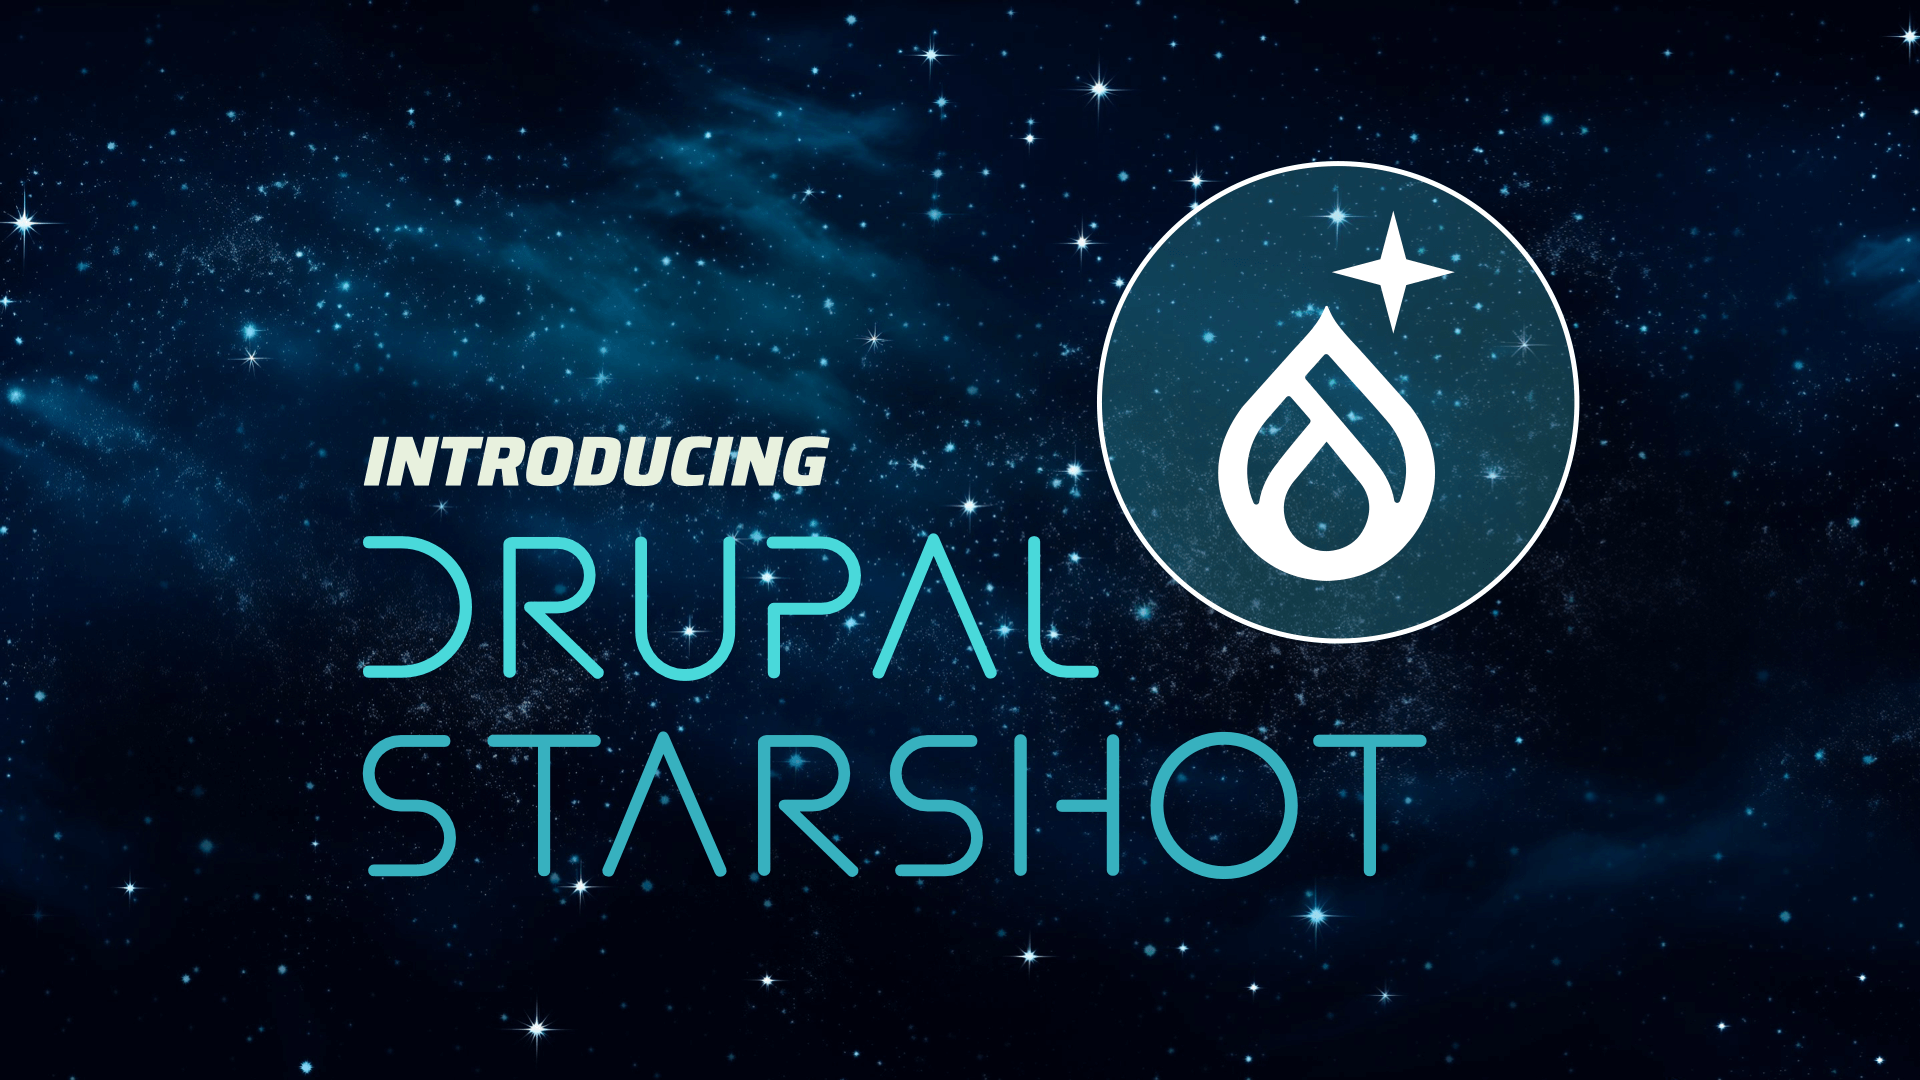 Drupal Starshot Introducing the Next Generation of Drupal